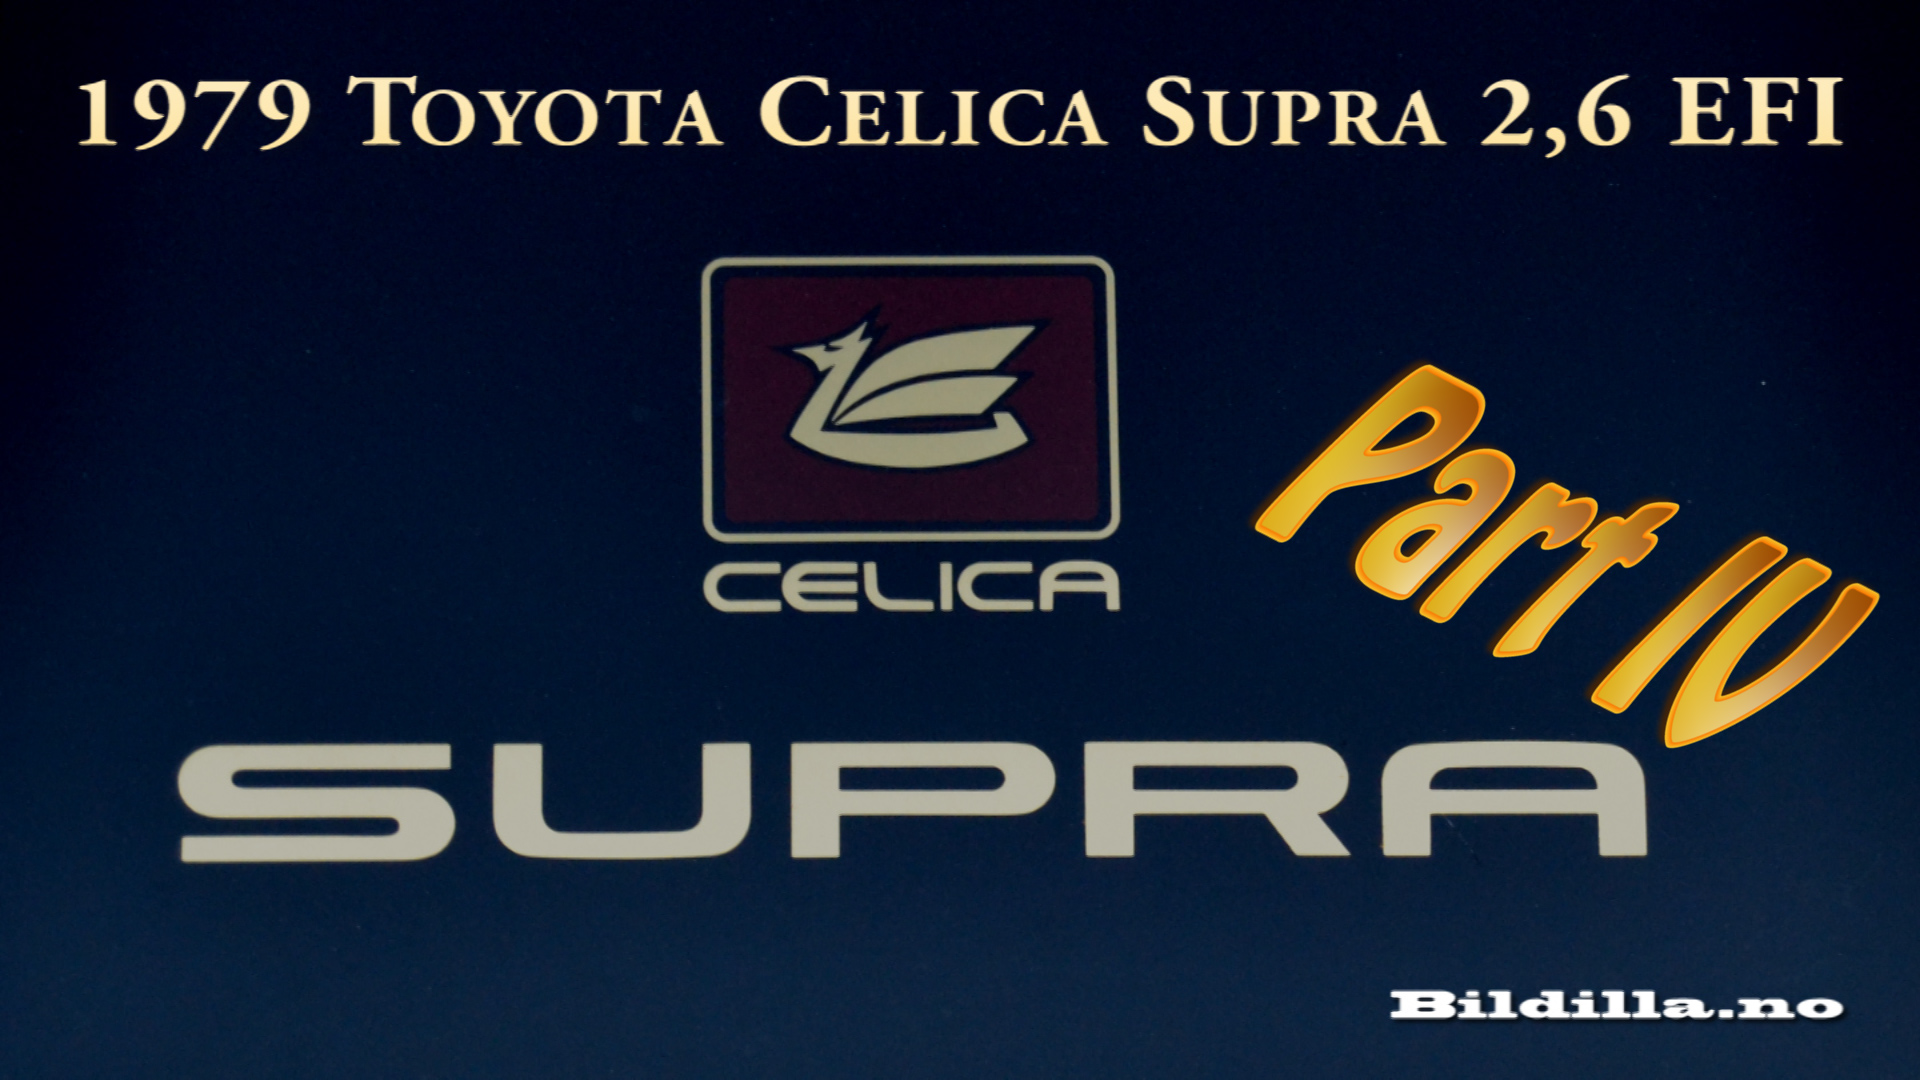 79 Toyota Celica Supra restaurering